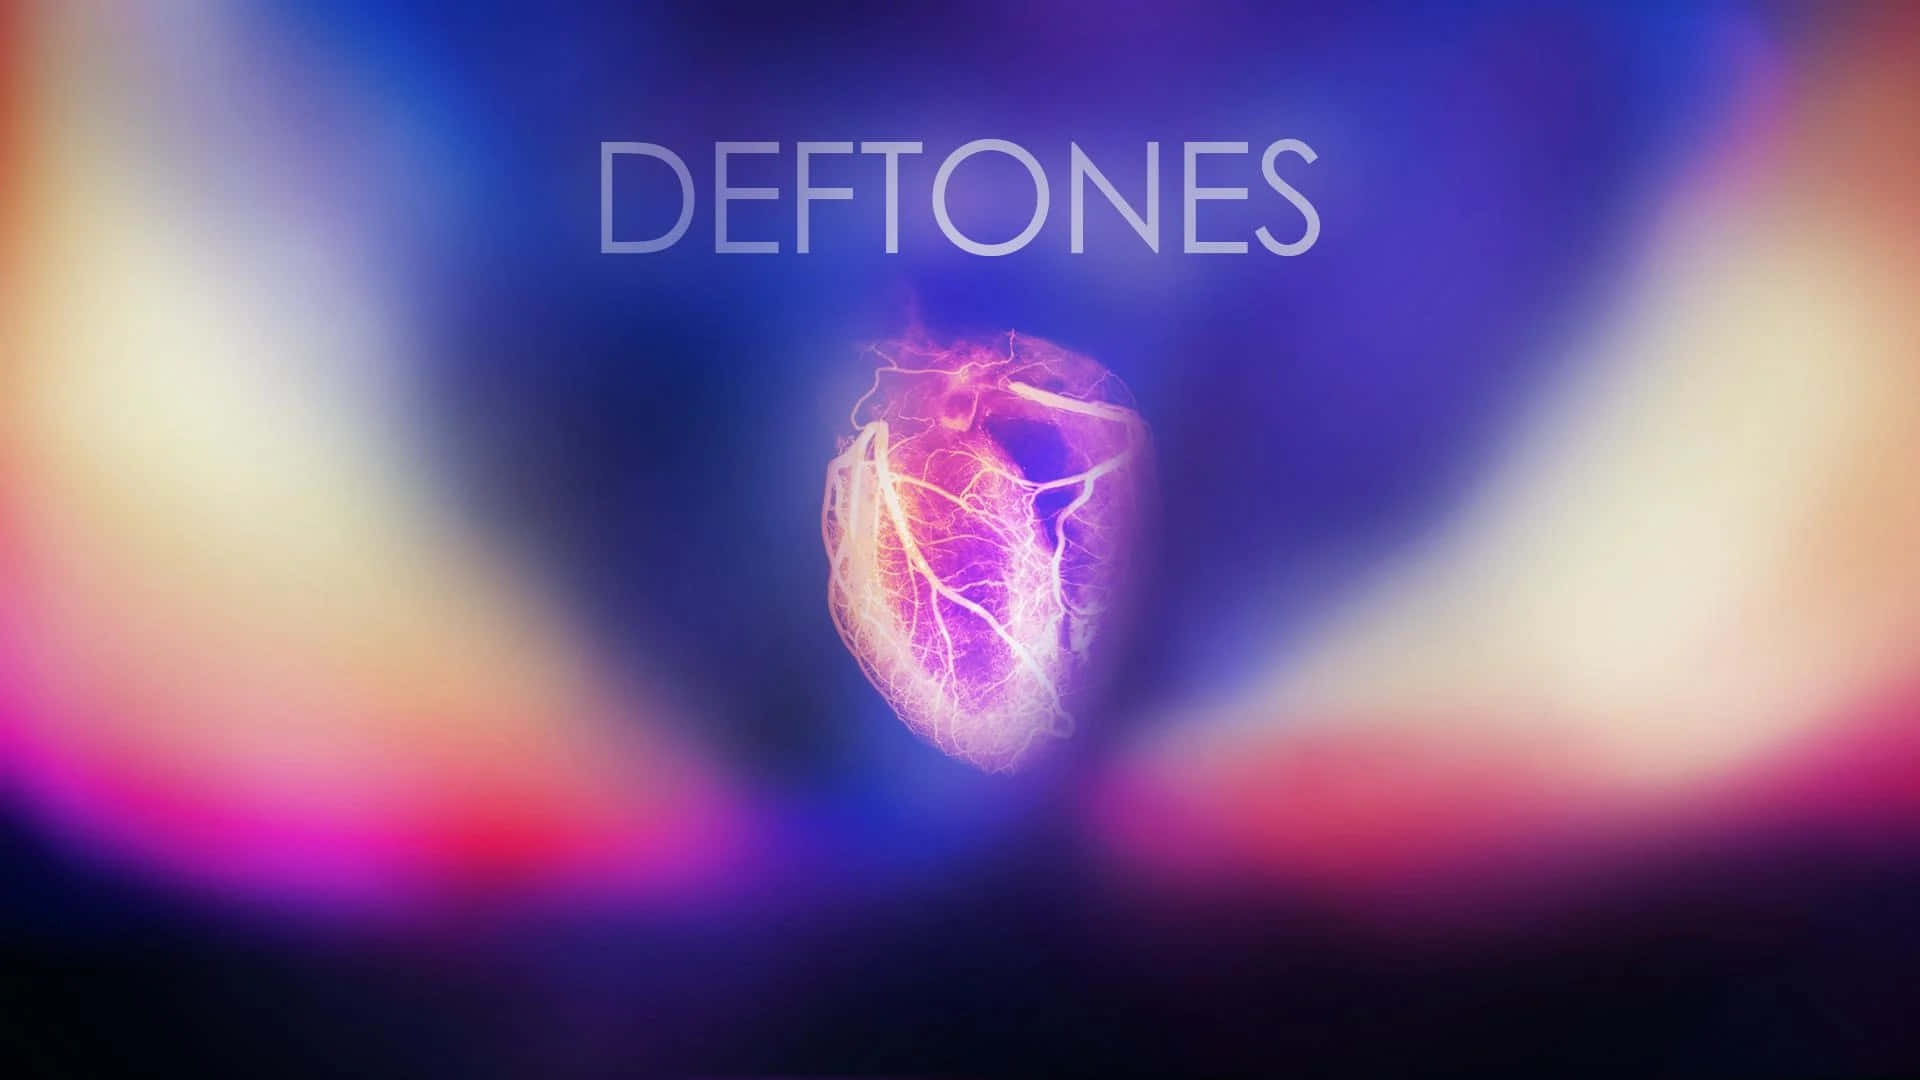 Deftones - A Heart With A Purple Light Wallpaper